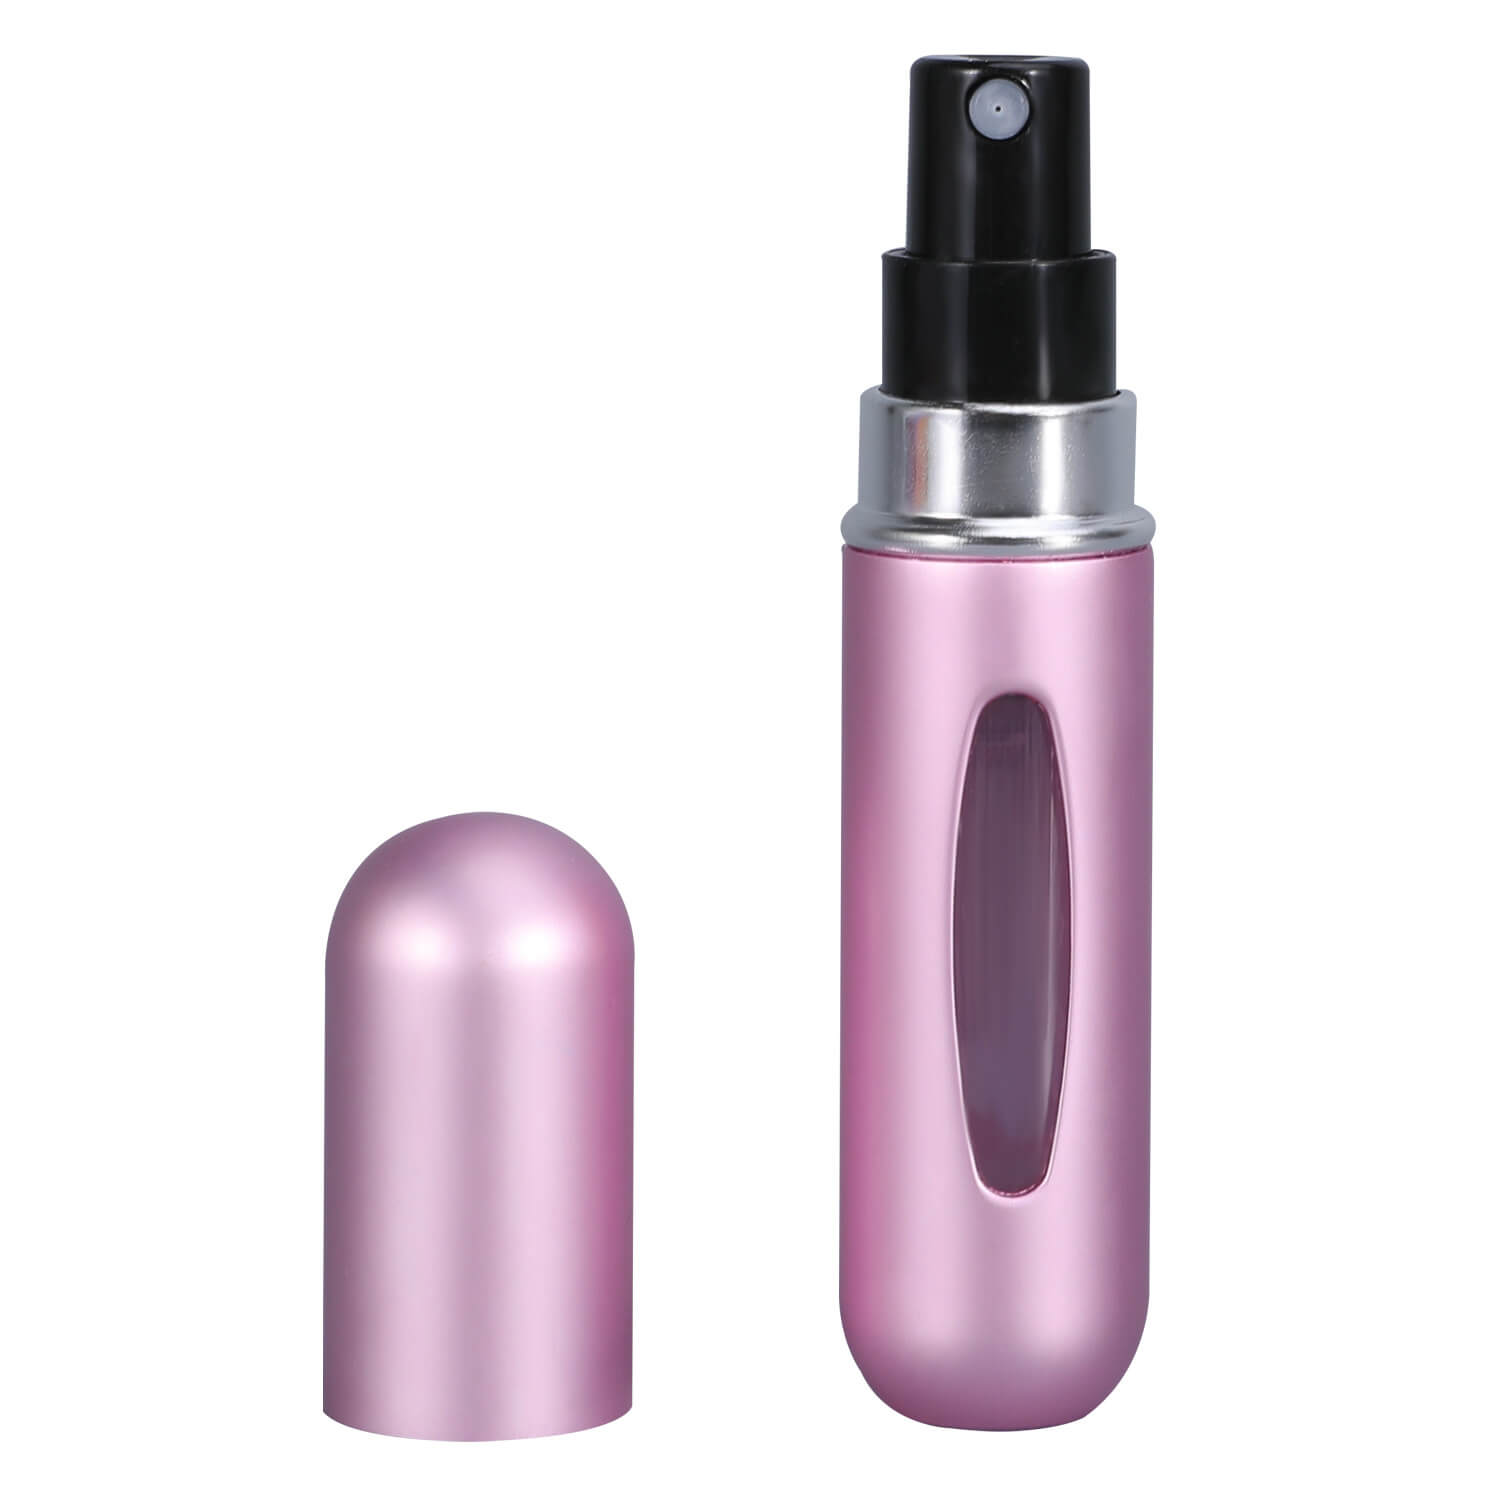 Mini 5ml Colored Travel Perfume Bottle Sub Fragrance Atomizer - Xuzhou OLU Daily Products Co., Ltd.